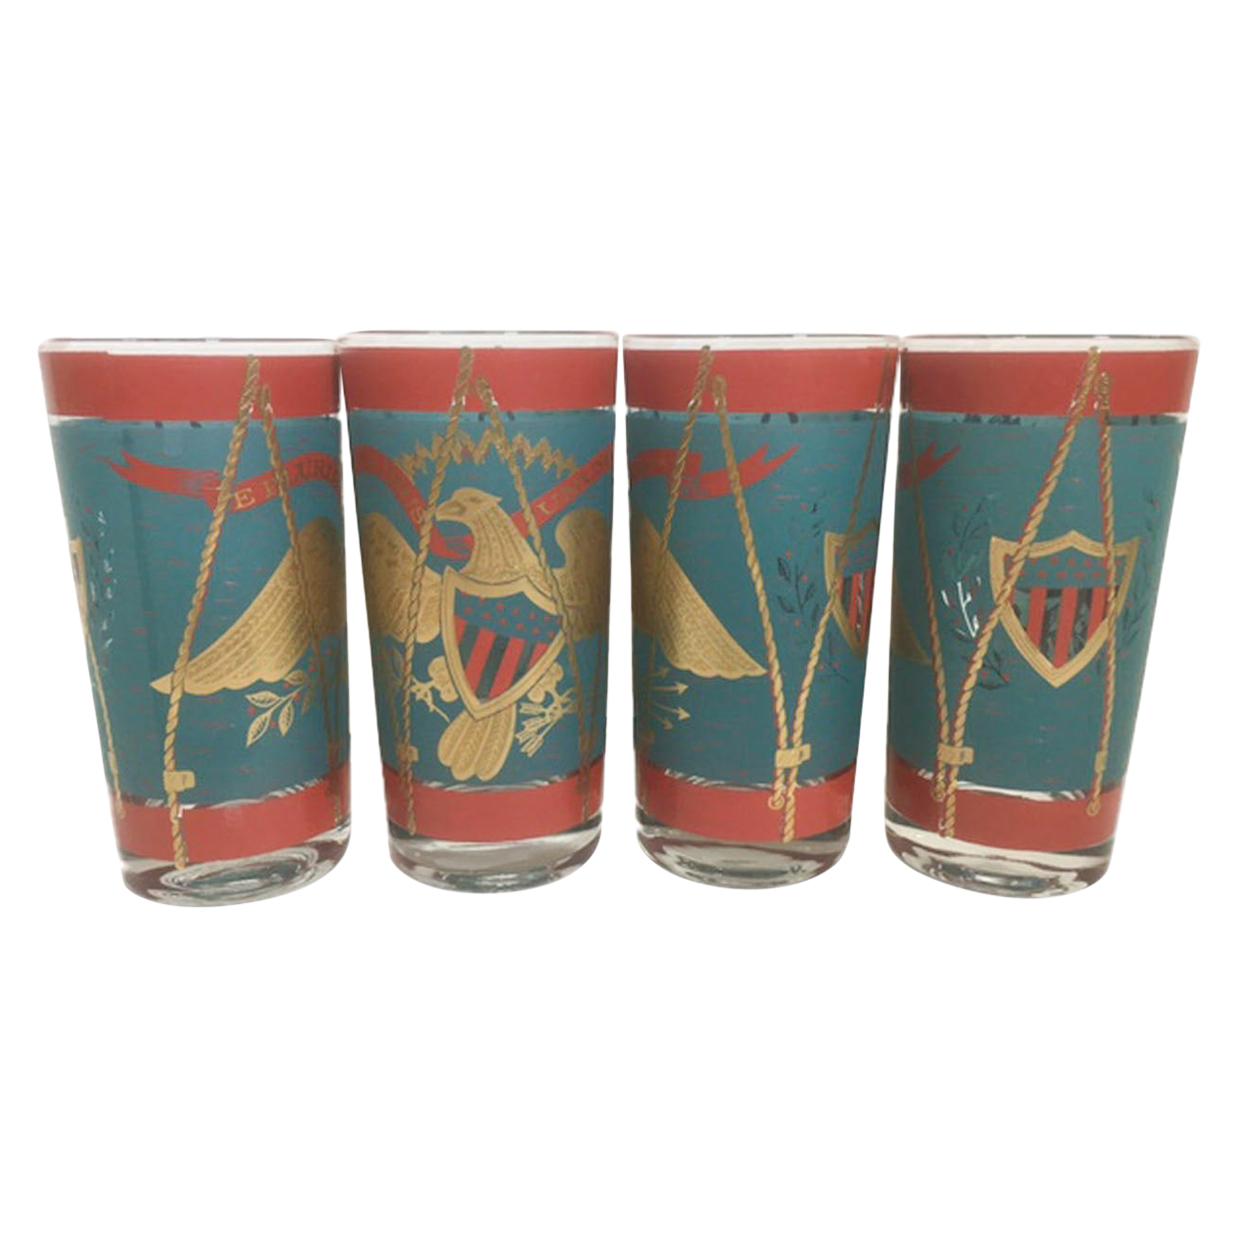 8 Vintage Cera Glassware Highball Glasses, Regimental Drum